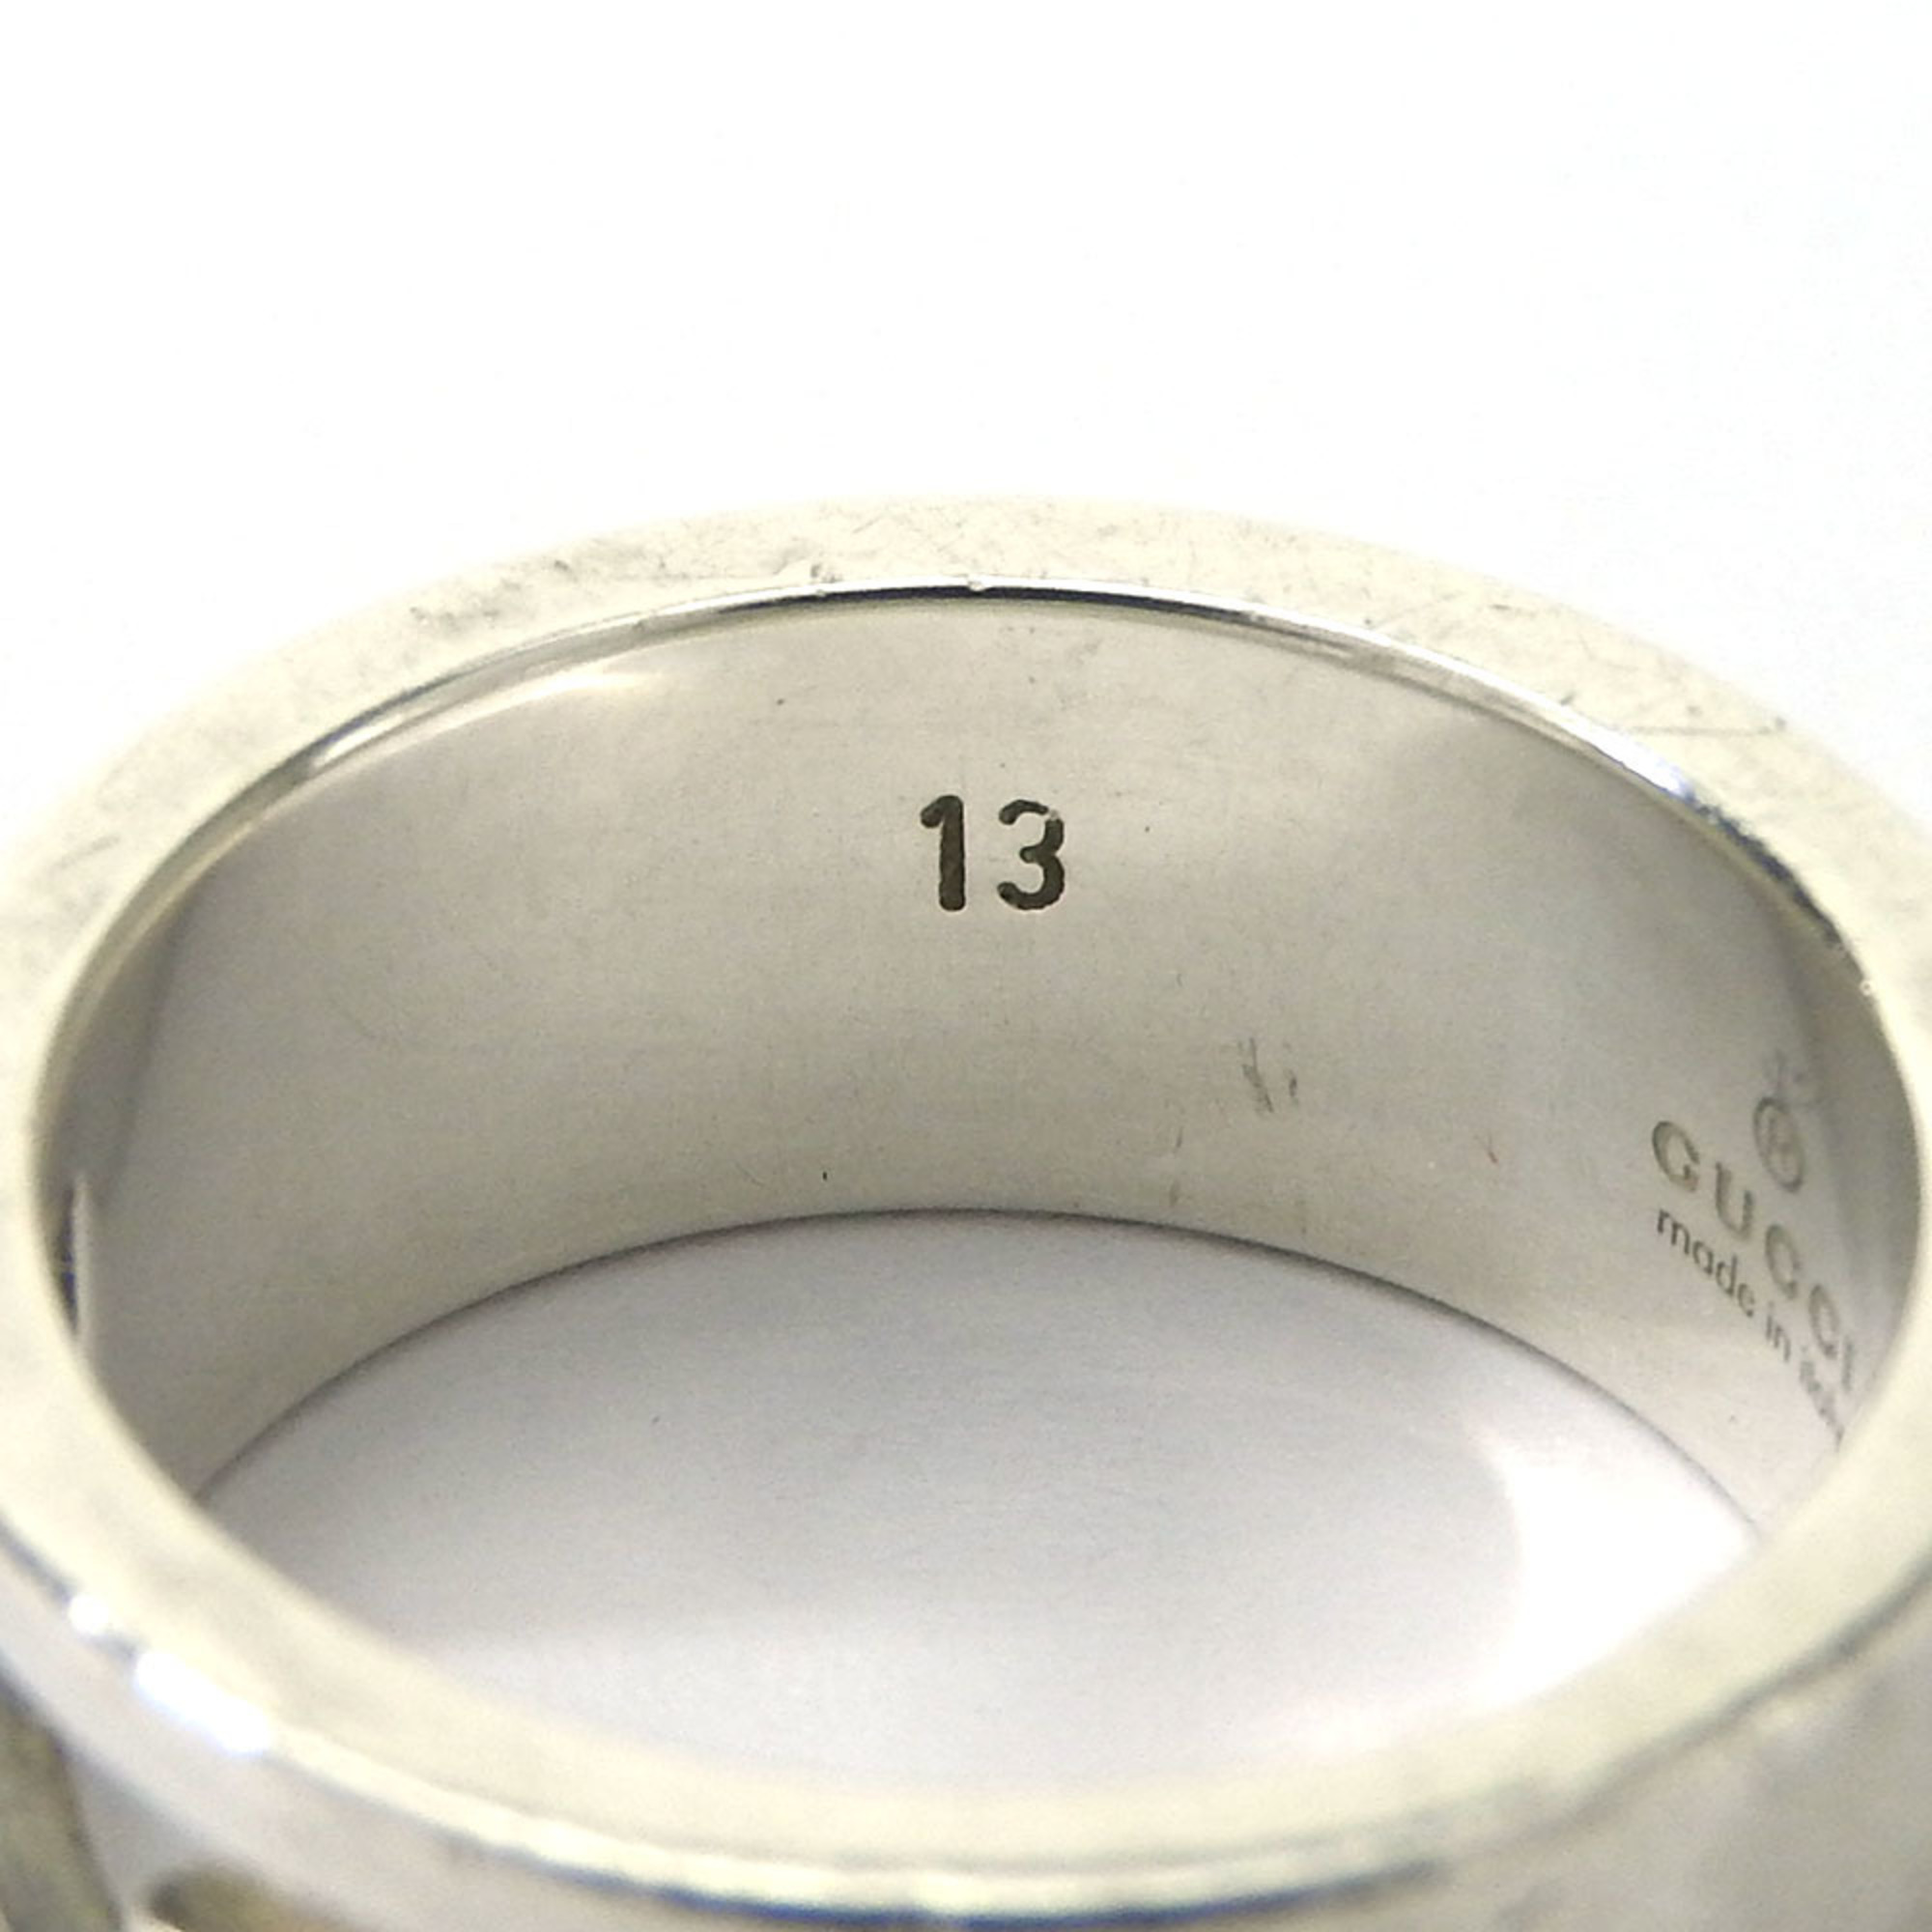 Gucci Rings, Silver 925, Approx. 7.5g, Silver, Women's, Men's, GUCCI